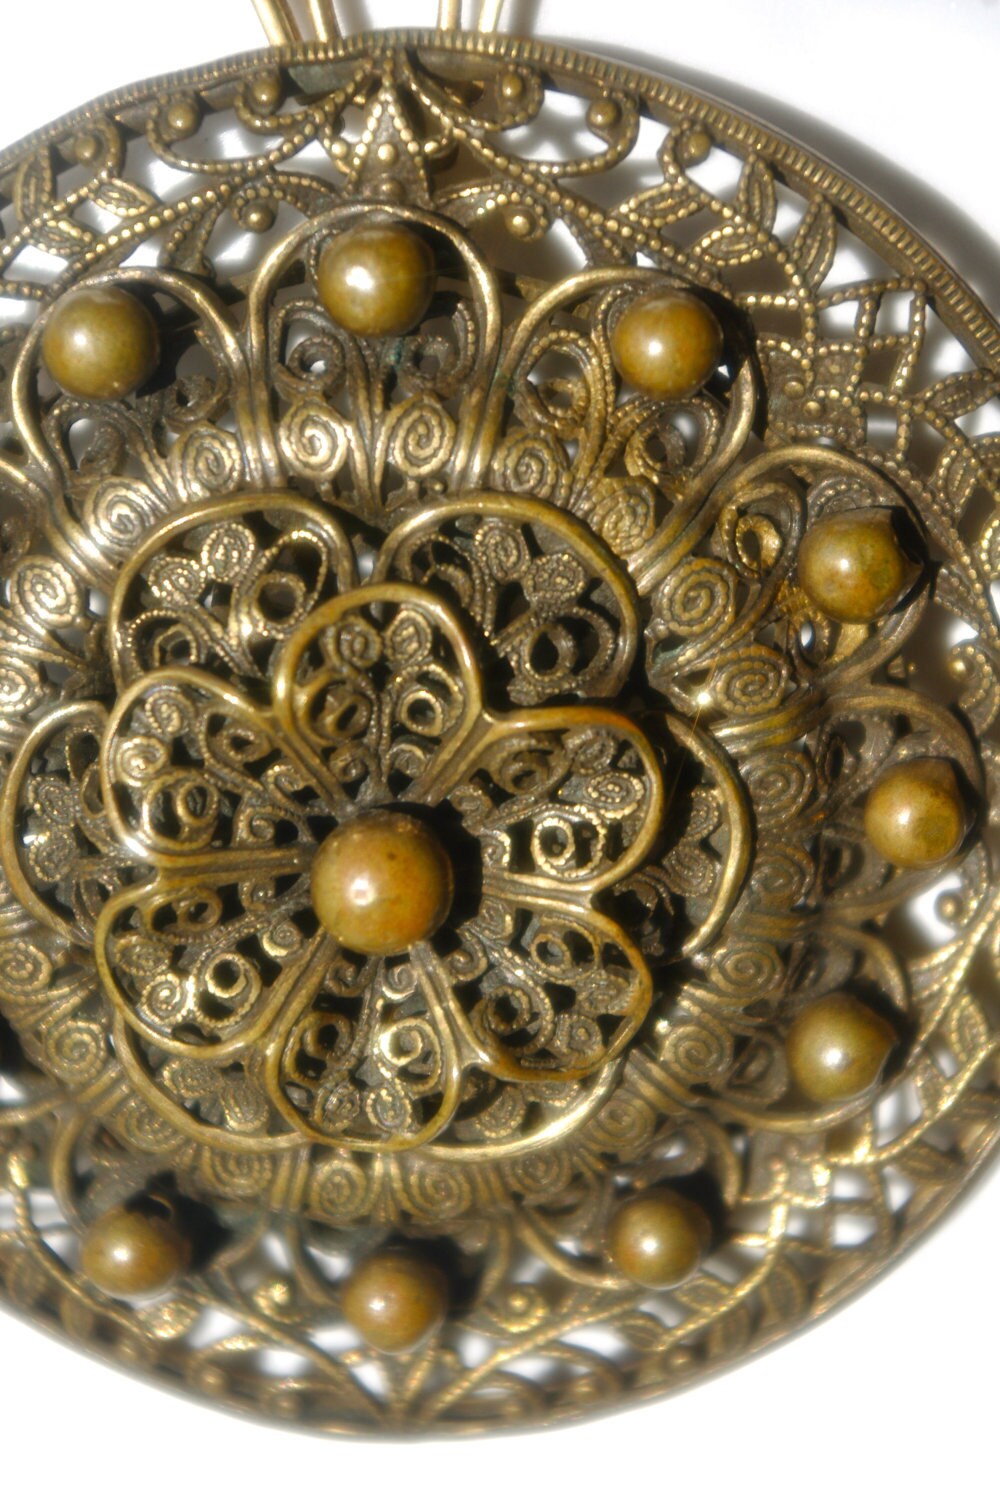 Gorgeous Antique Steampunk Victorian Brass Filigree Czechoslovakian Large Pendant Lavaliere Necklace